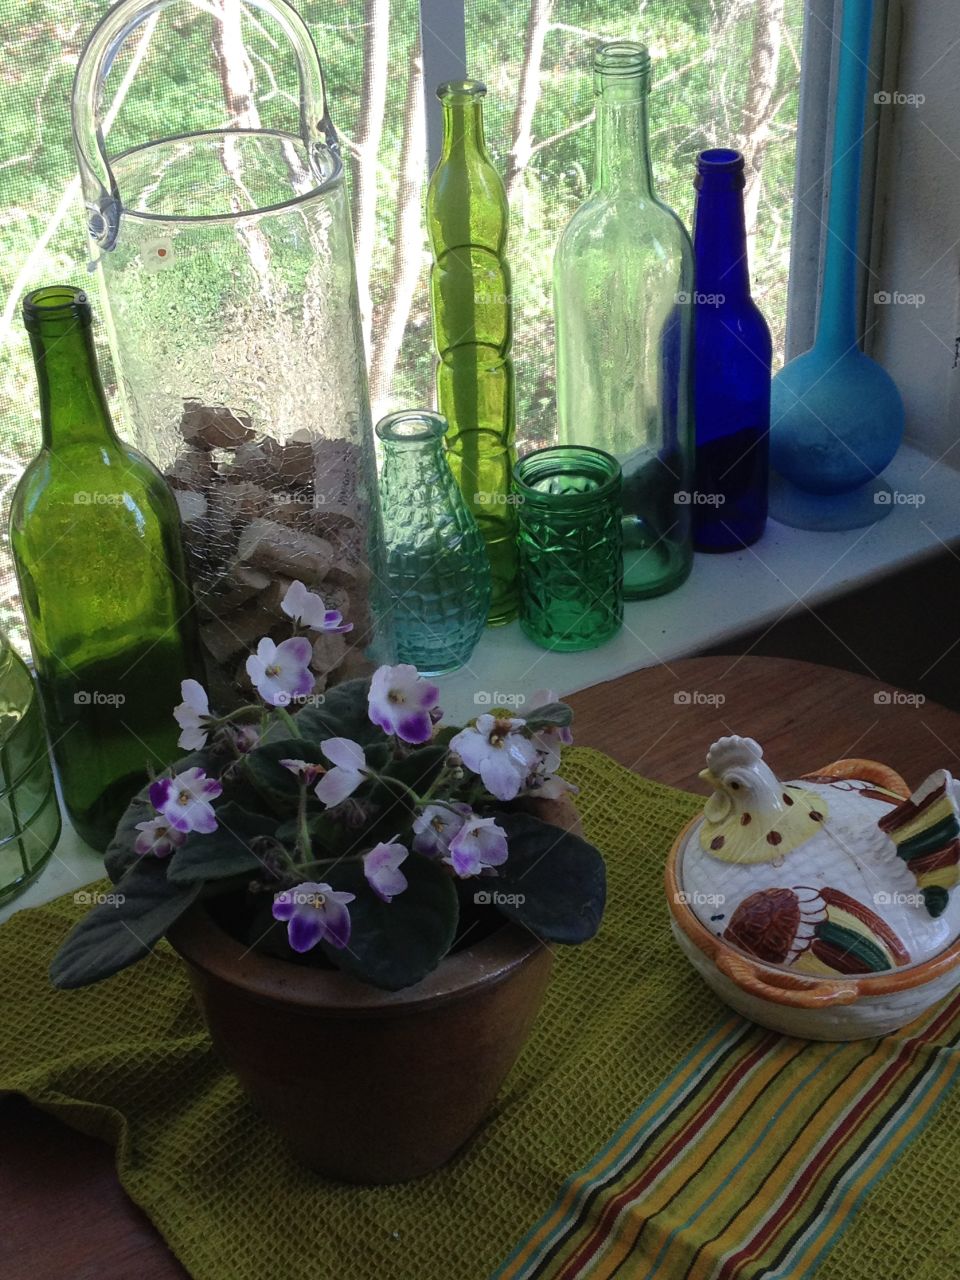 Grandma's violets.